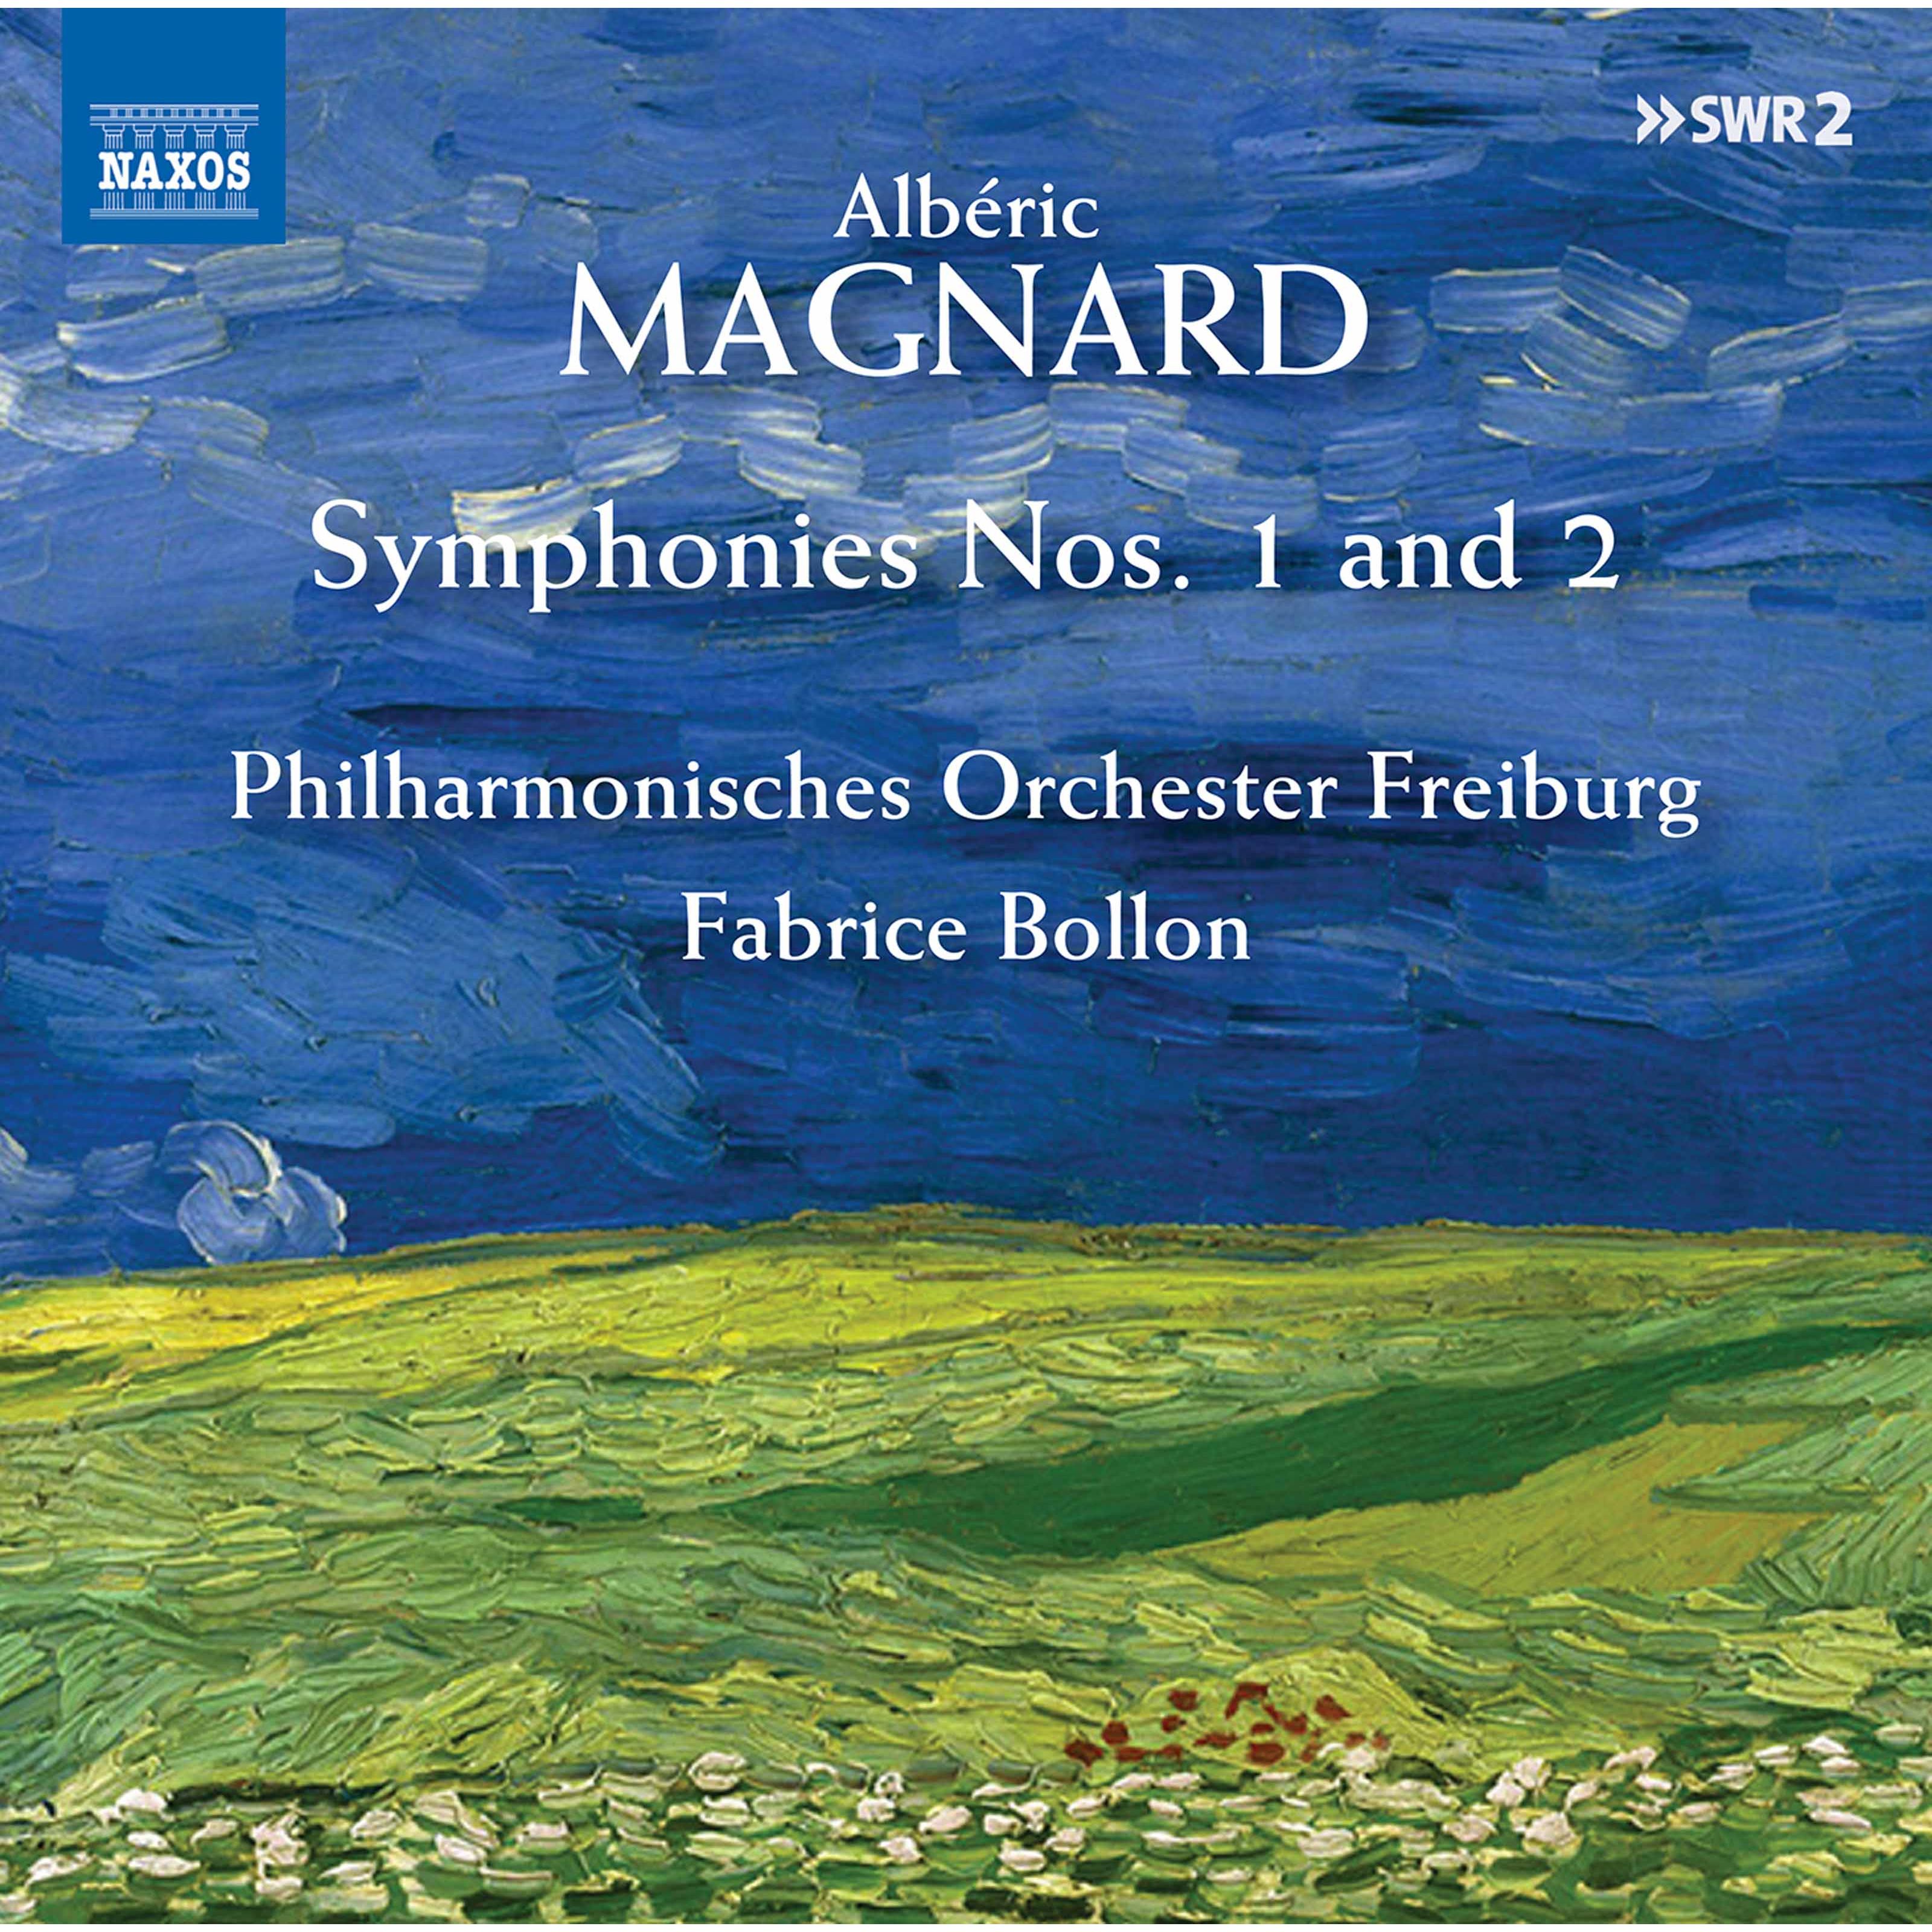 Philharmonisches Orchester Freiburg & Fabrice Bollon – Magnard: Symphonies Nos. 1 and 2 (2020) [FLAC 24bit/48kHz]